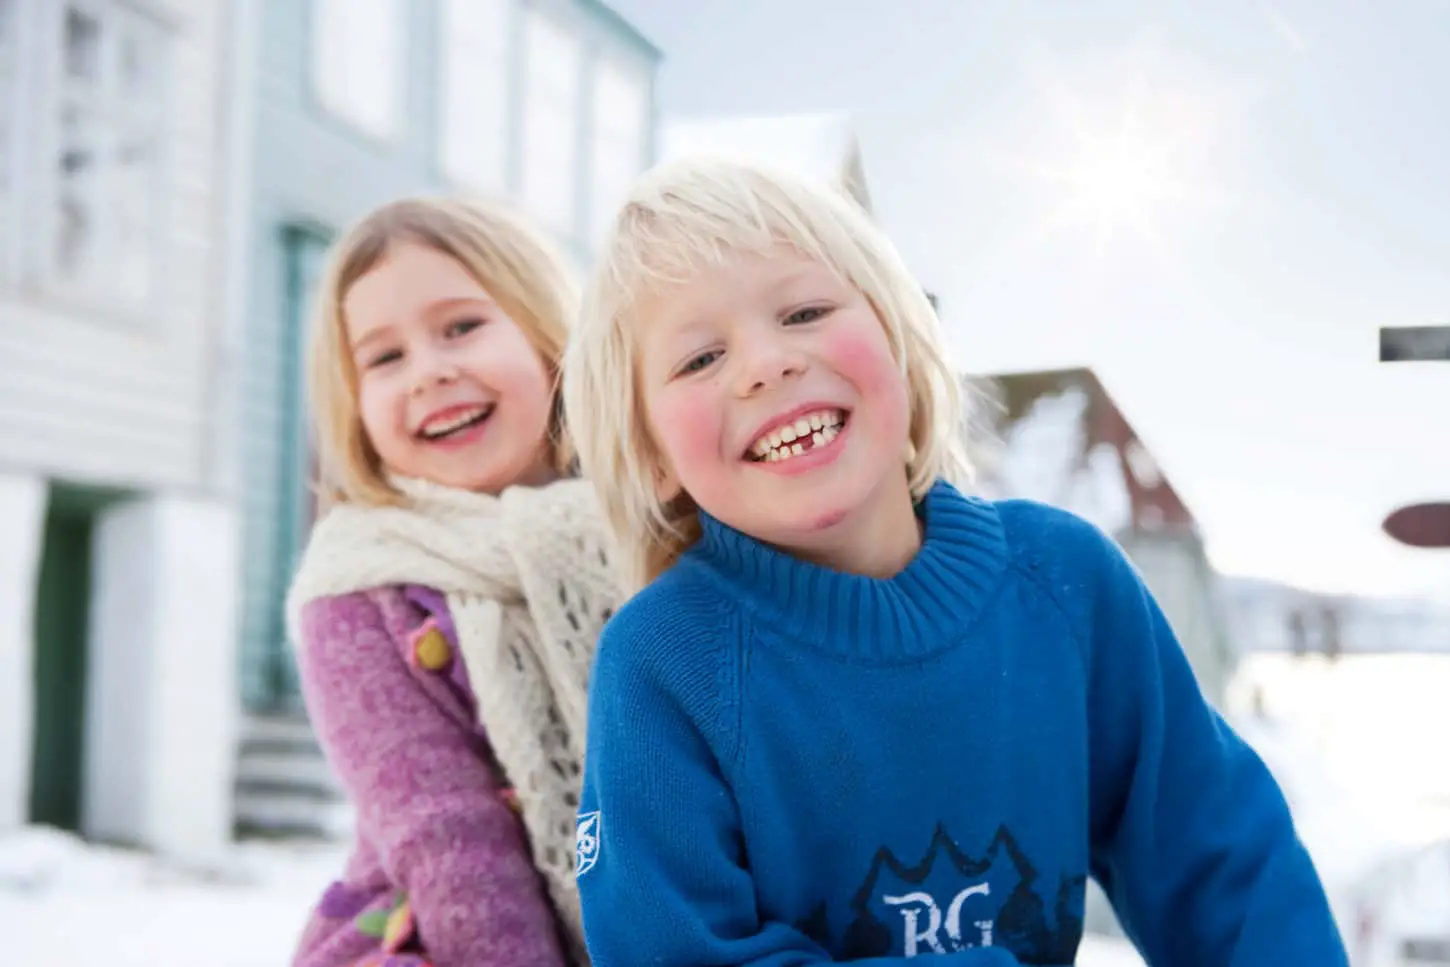 An image of Scandinavian children smiling during the winter season.